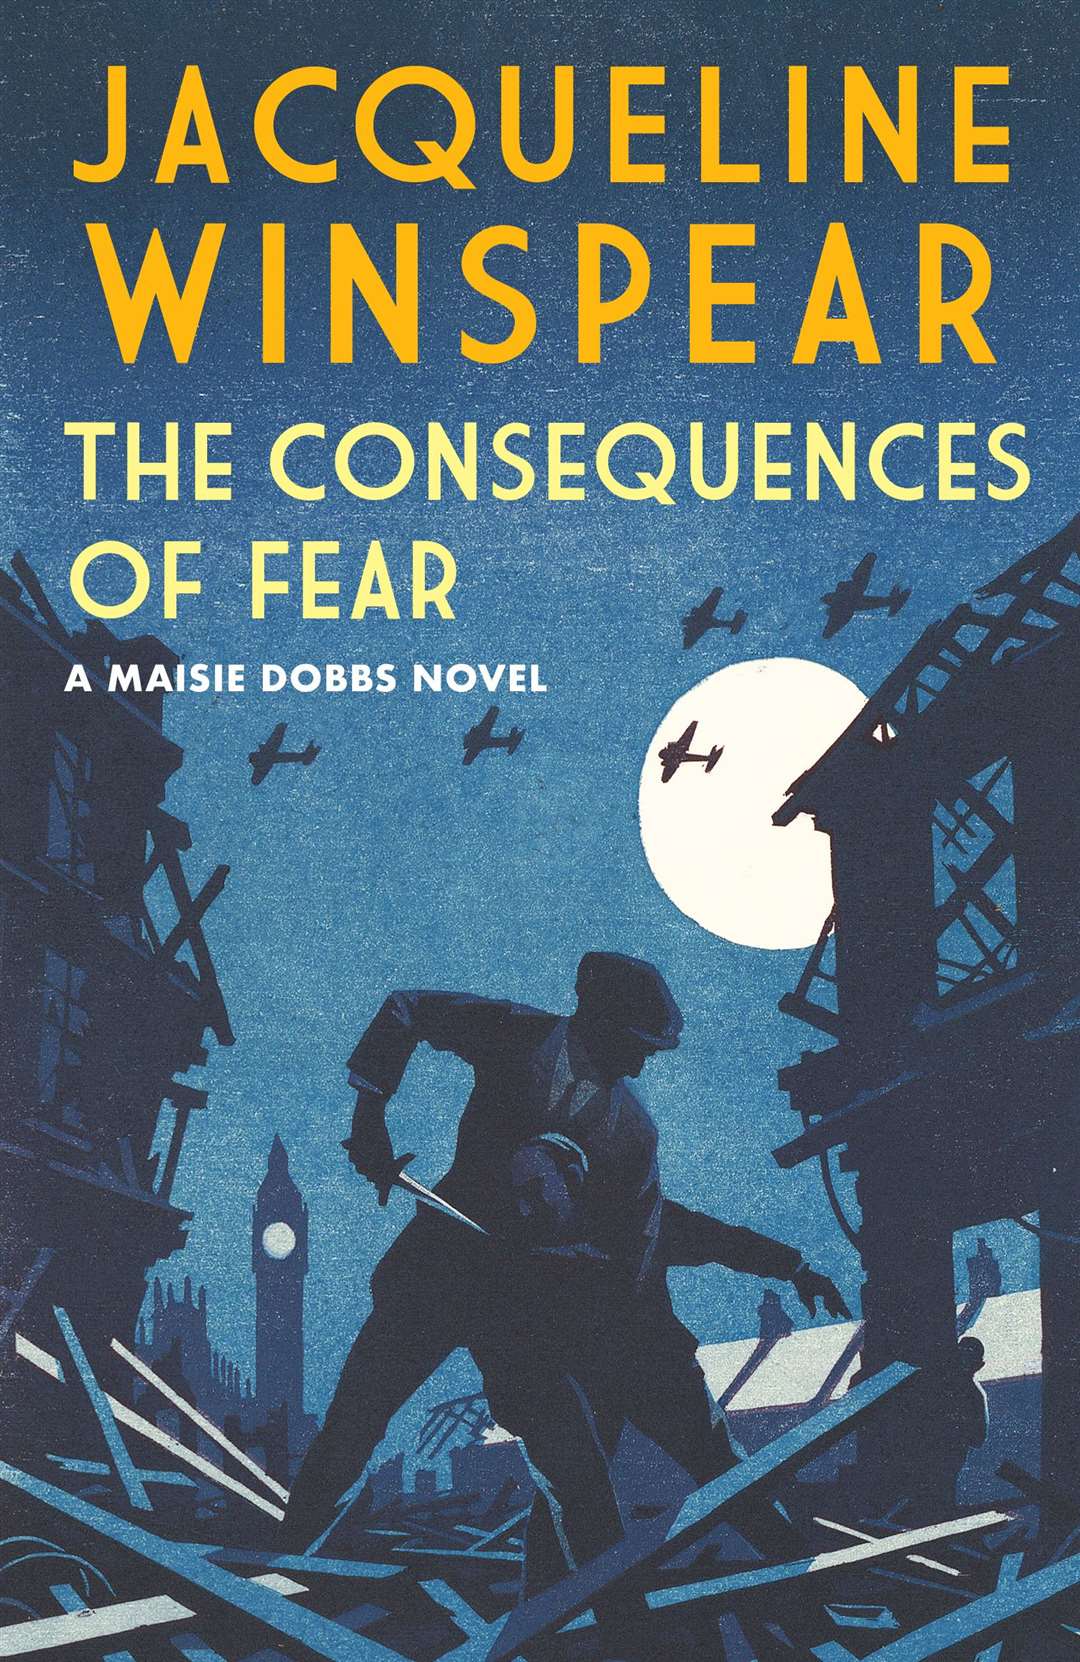 Kent-born author Jacqueline Winspear's latest Maisie Dobbs novel